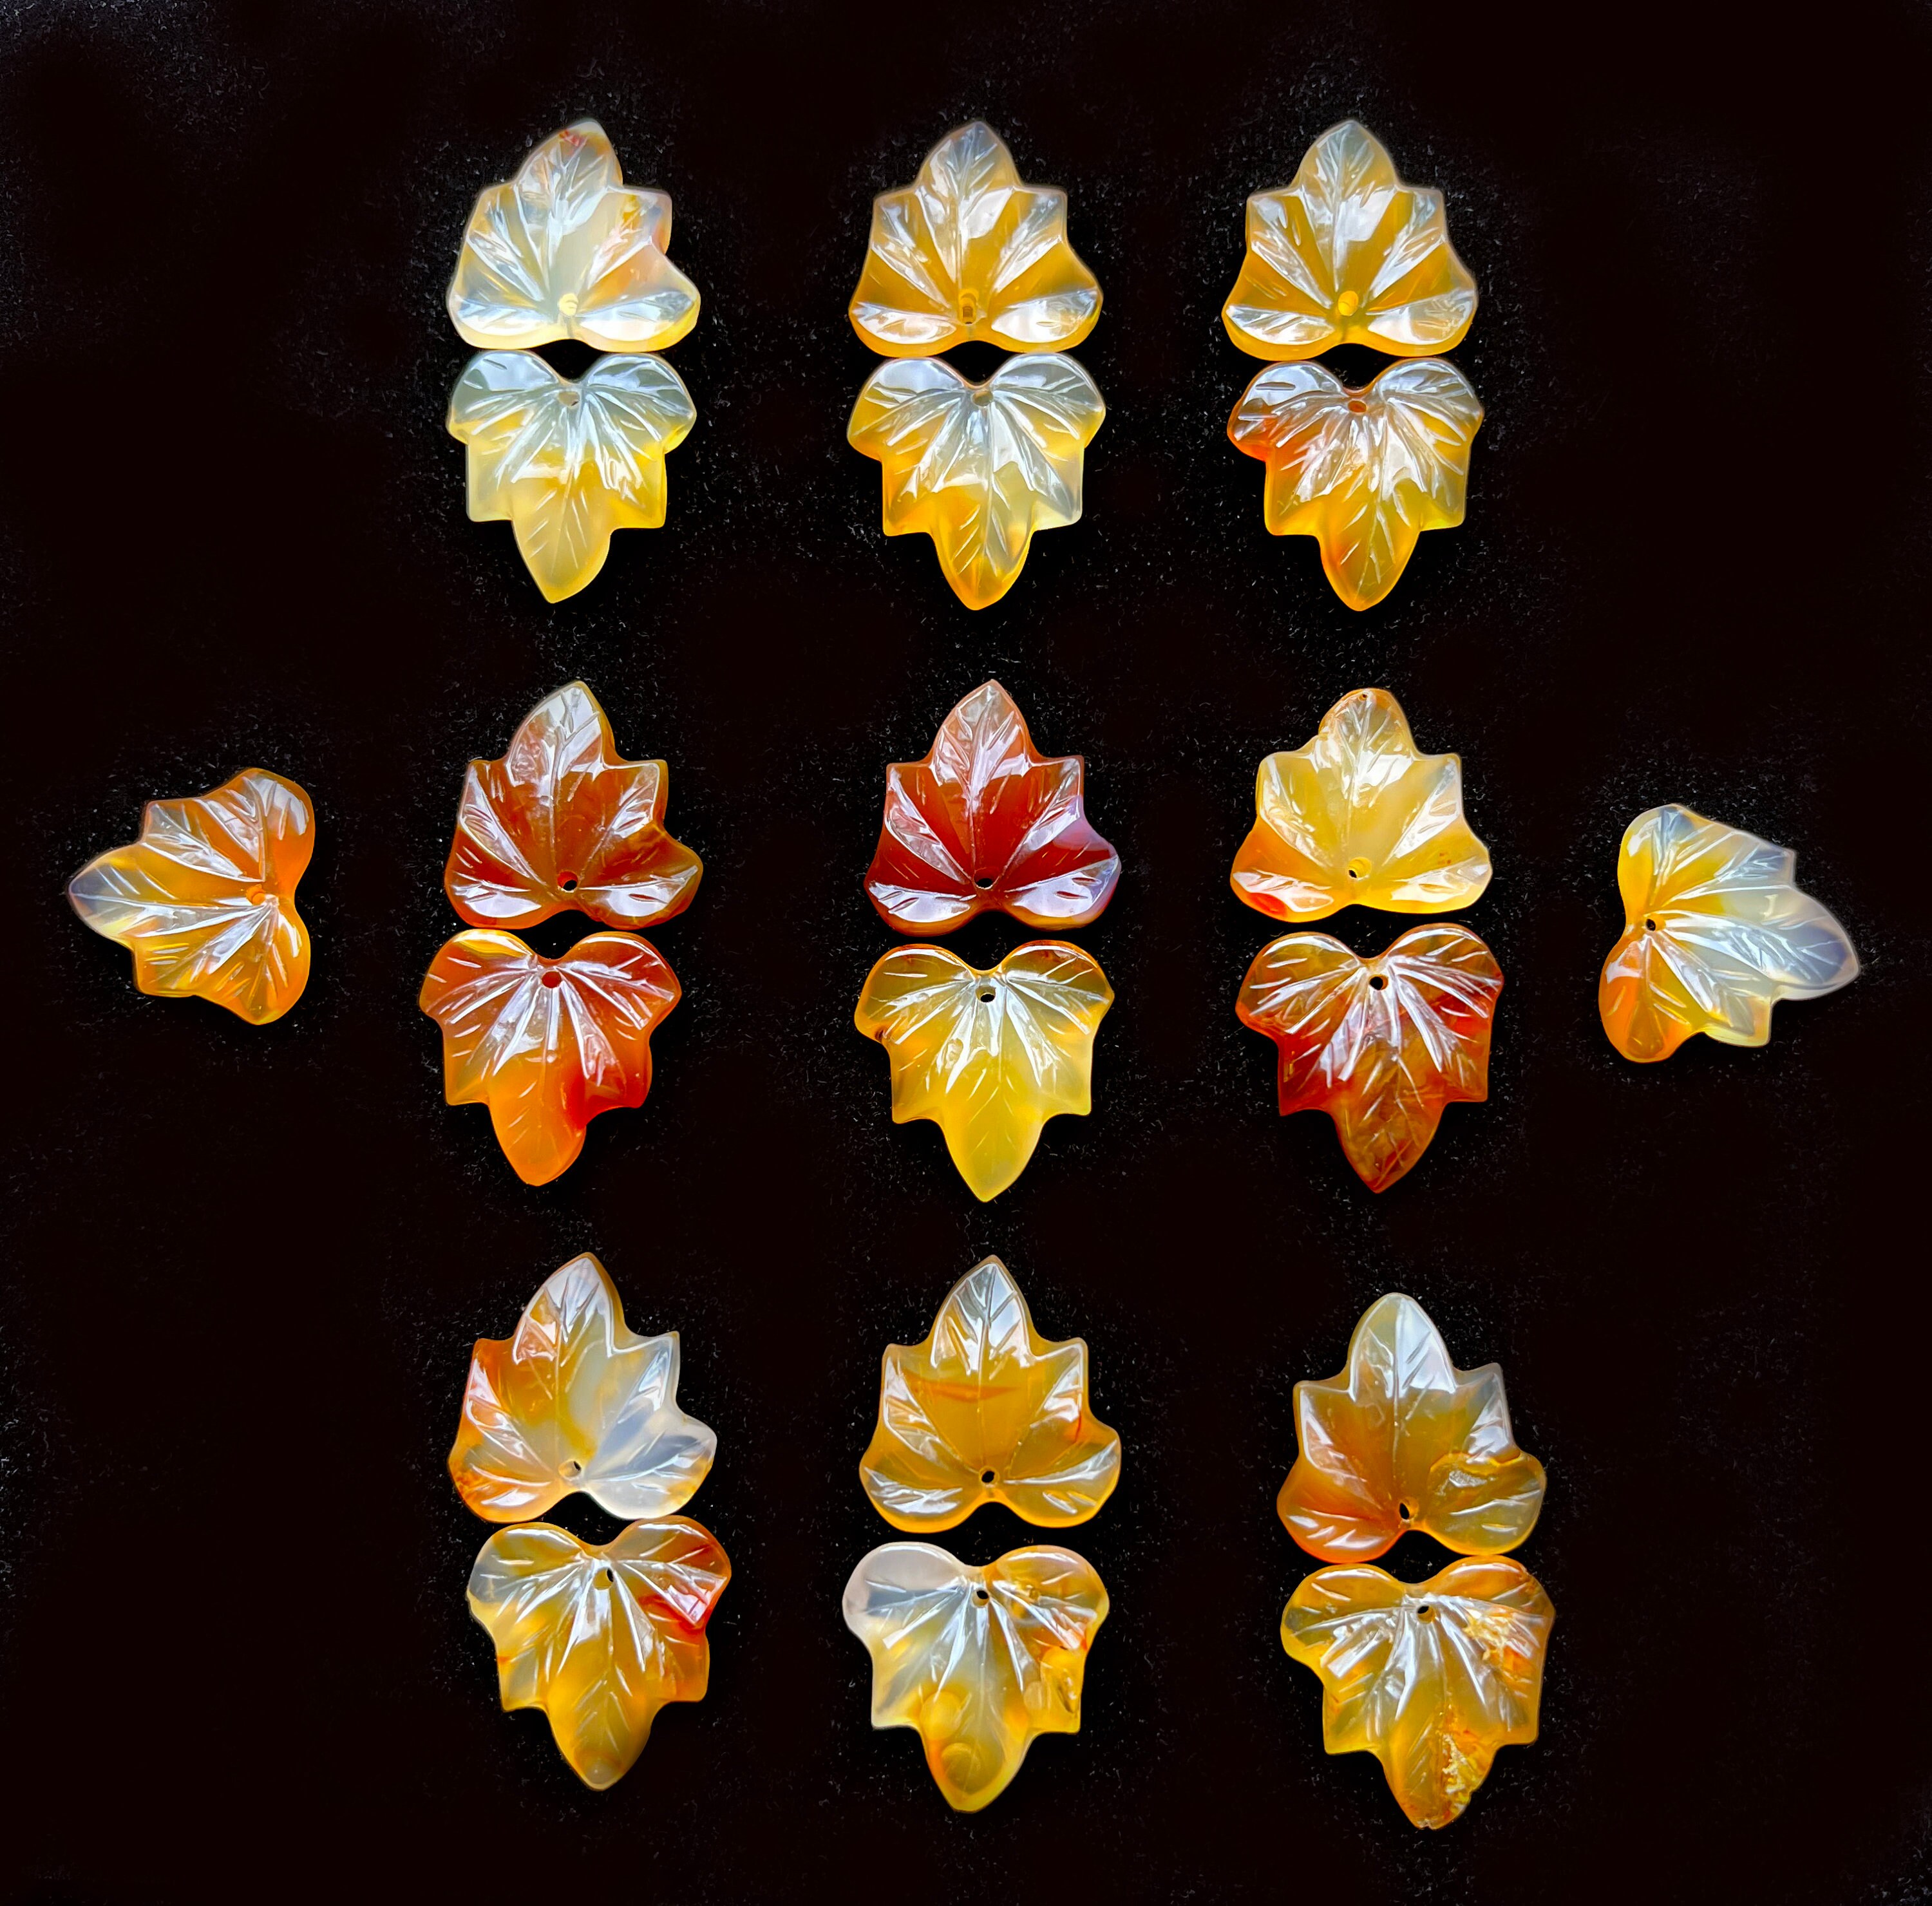 13mm Maple Leaf Beads - Light Orange with Gold Wash - 12 Beads